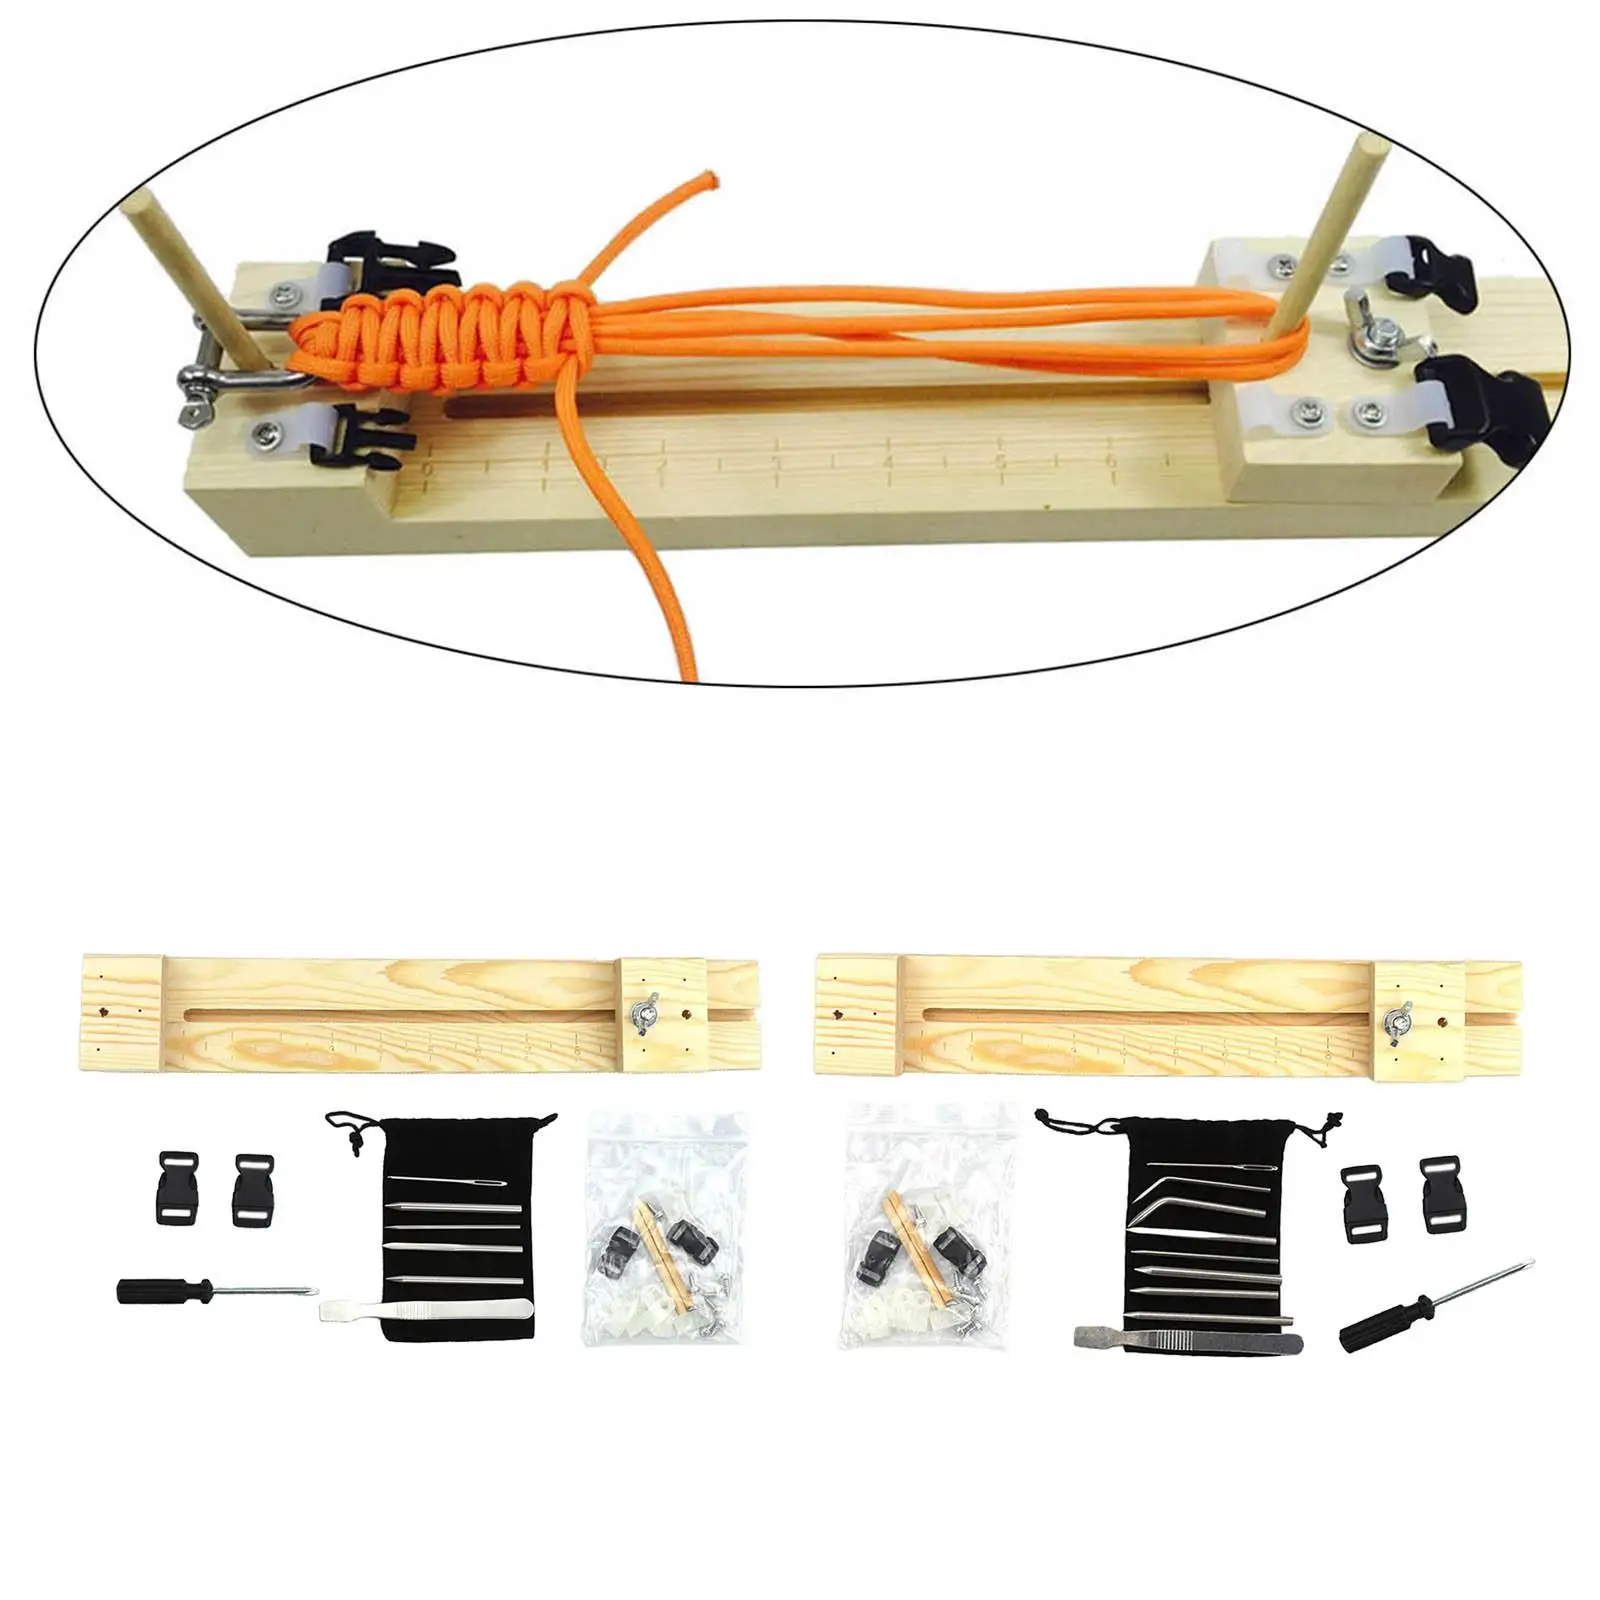 Jig Bracelet Maker Adjustable Wristband Maker Machine Parachute Cord Weaving Braiding Knitting Crafts